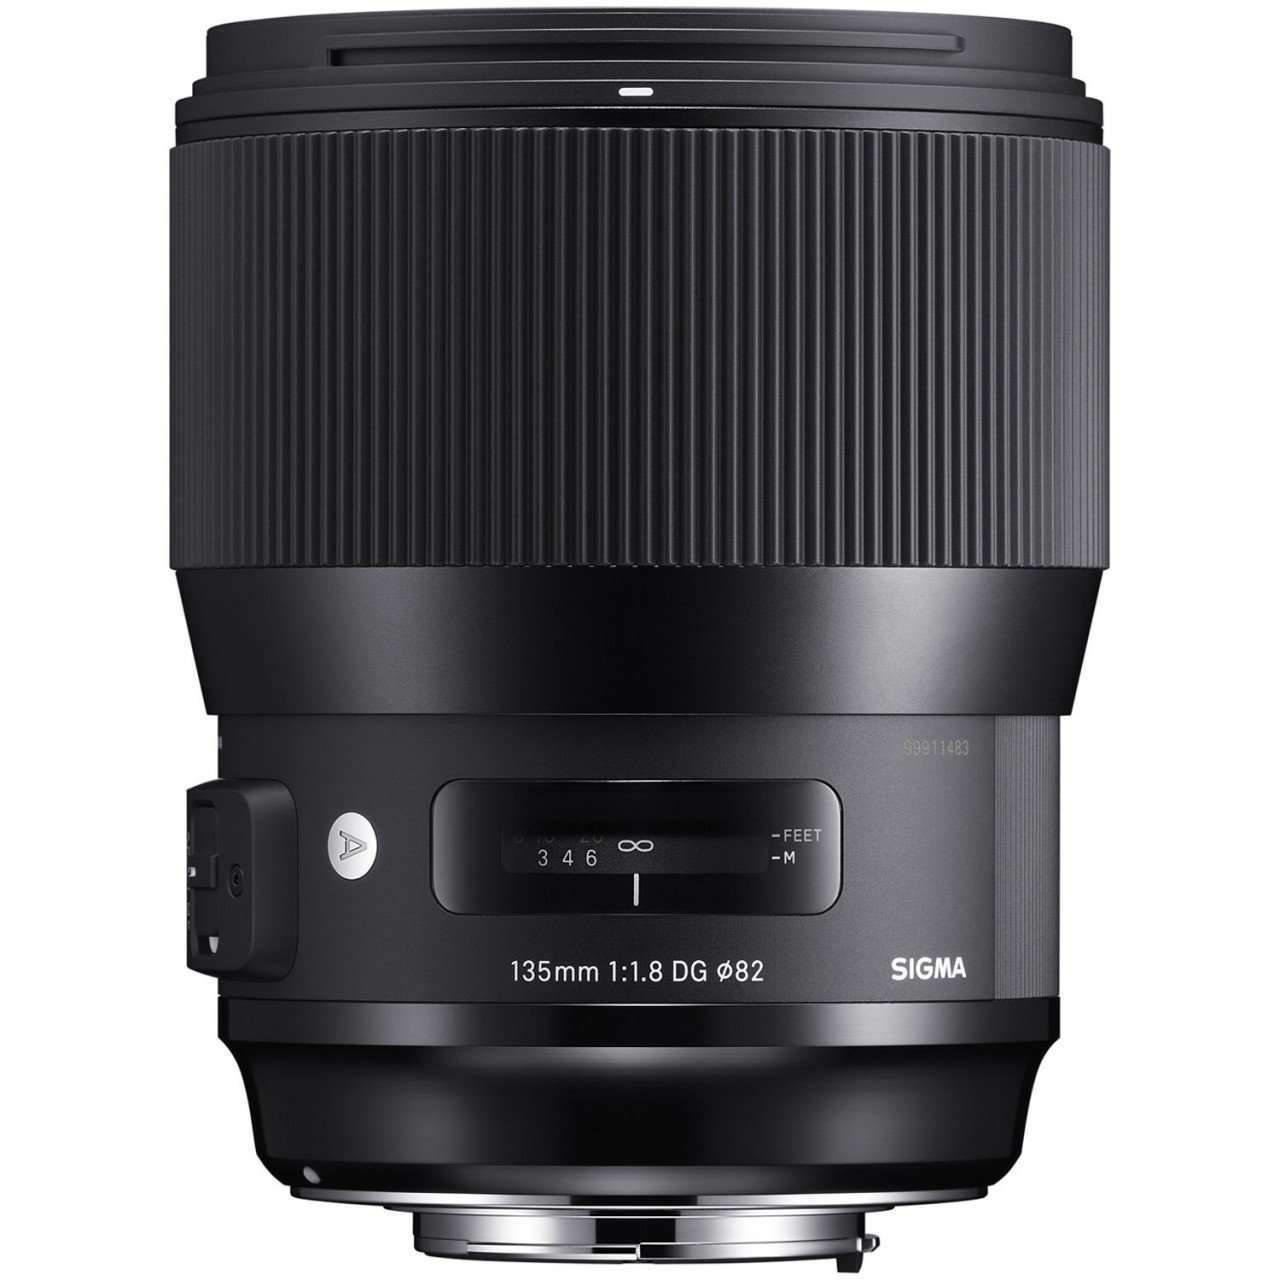 Sigma 135mm f/1.8 DG HSM Art Lens (Nikon) Sigma Lens - DSLR Fixed Focal Length